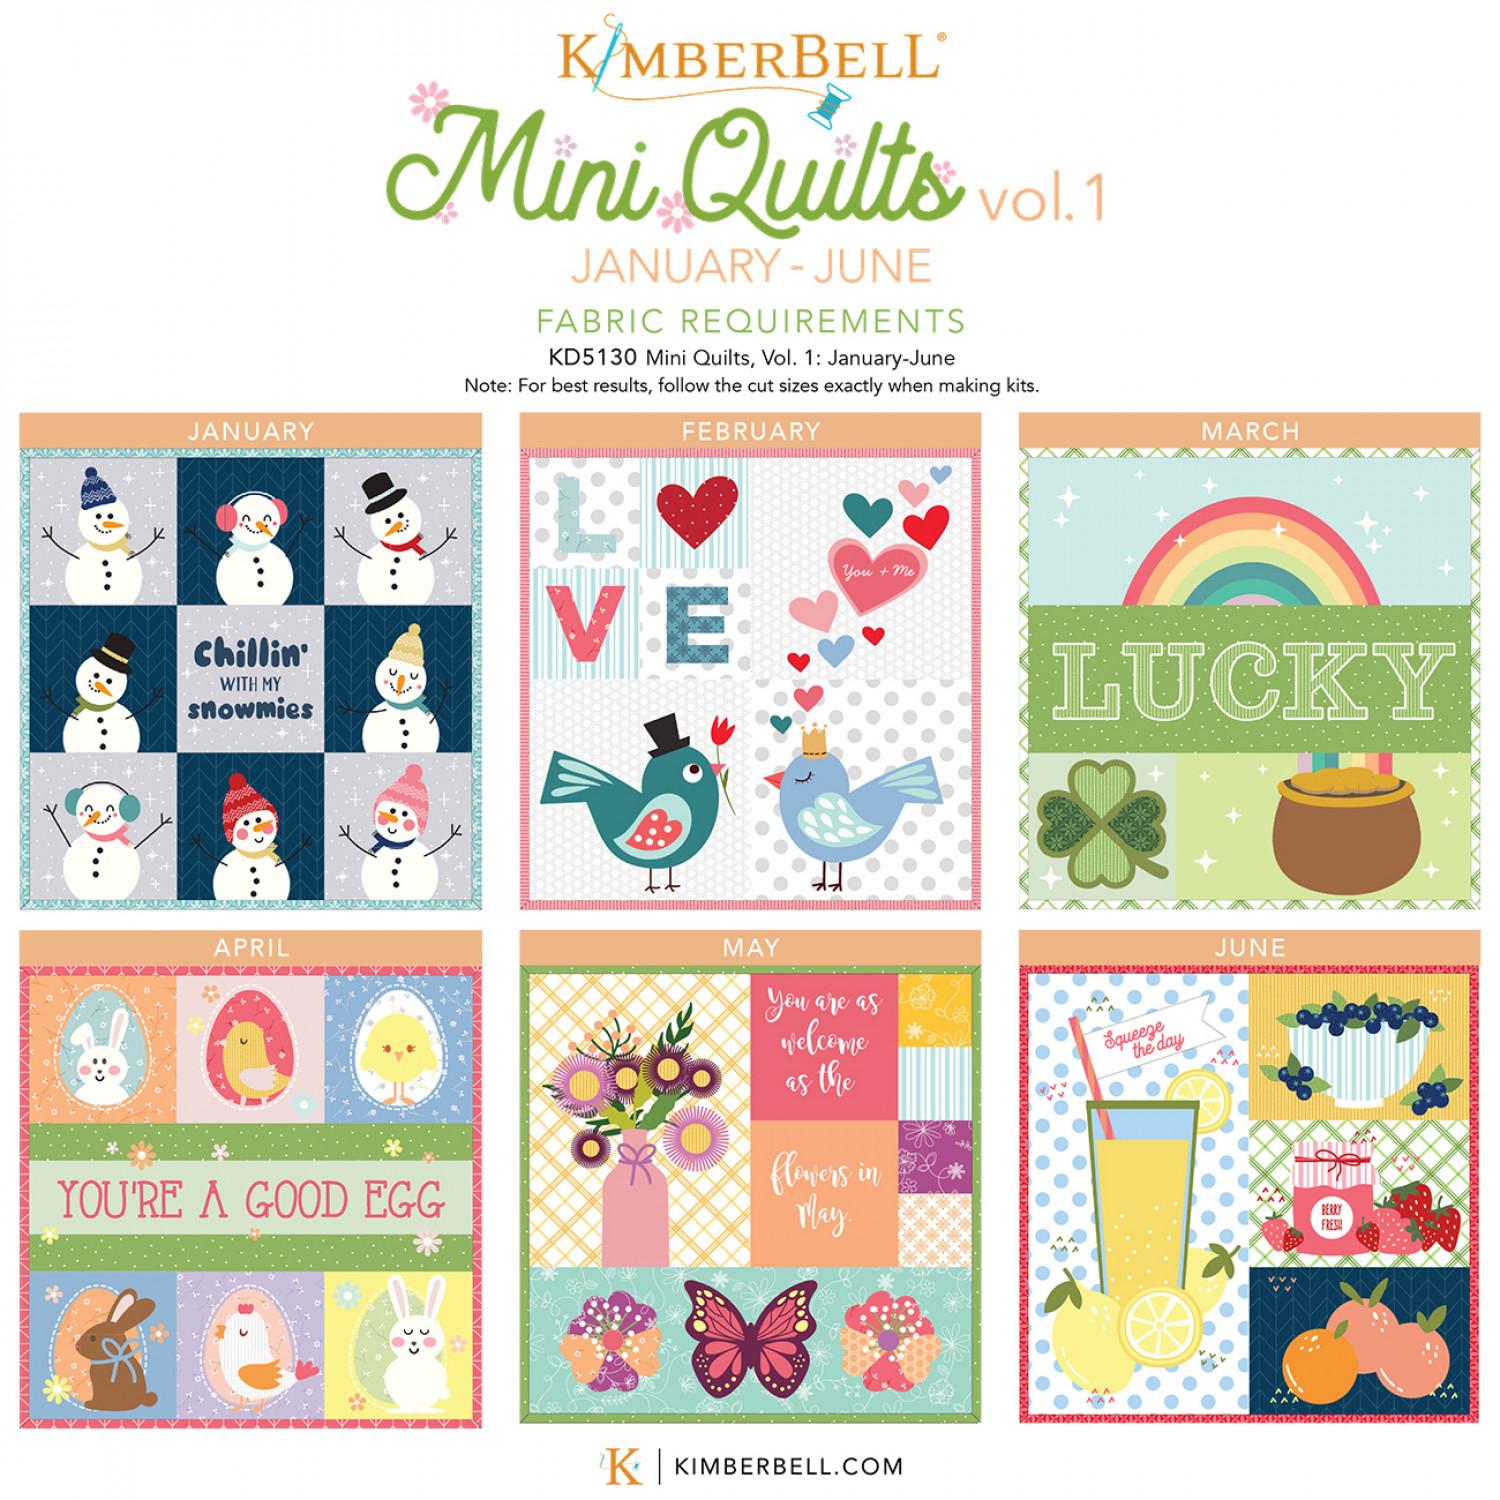 Mini Quilts Volume 1 January - June # KD5130